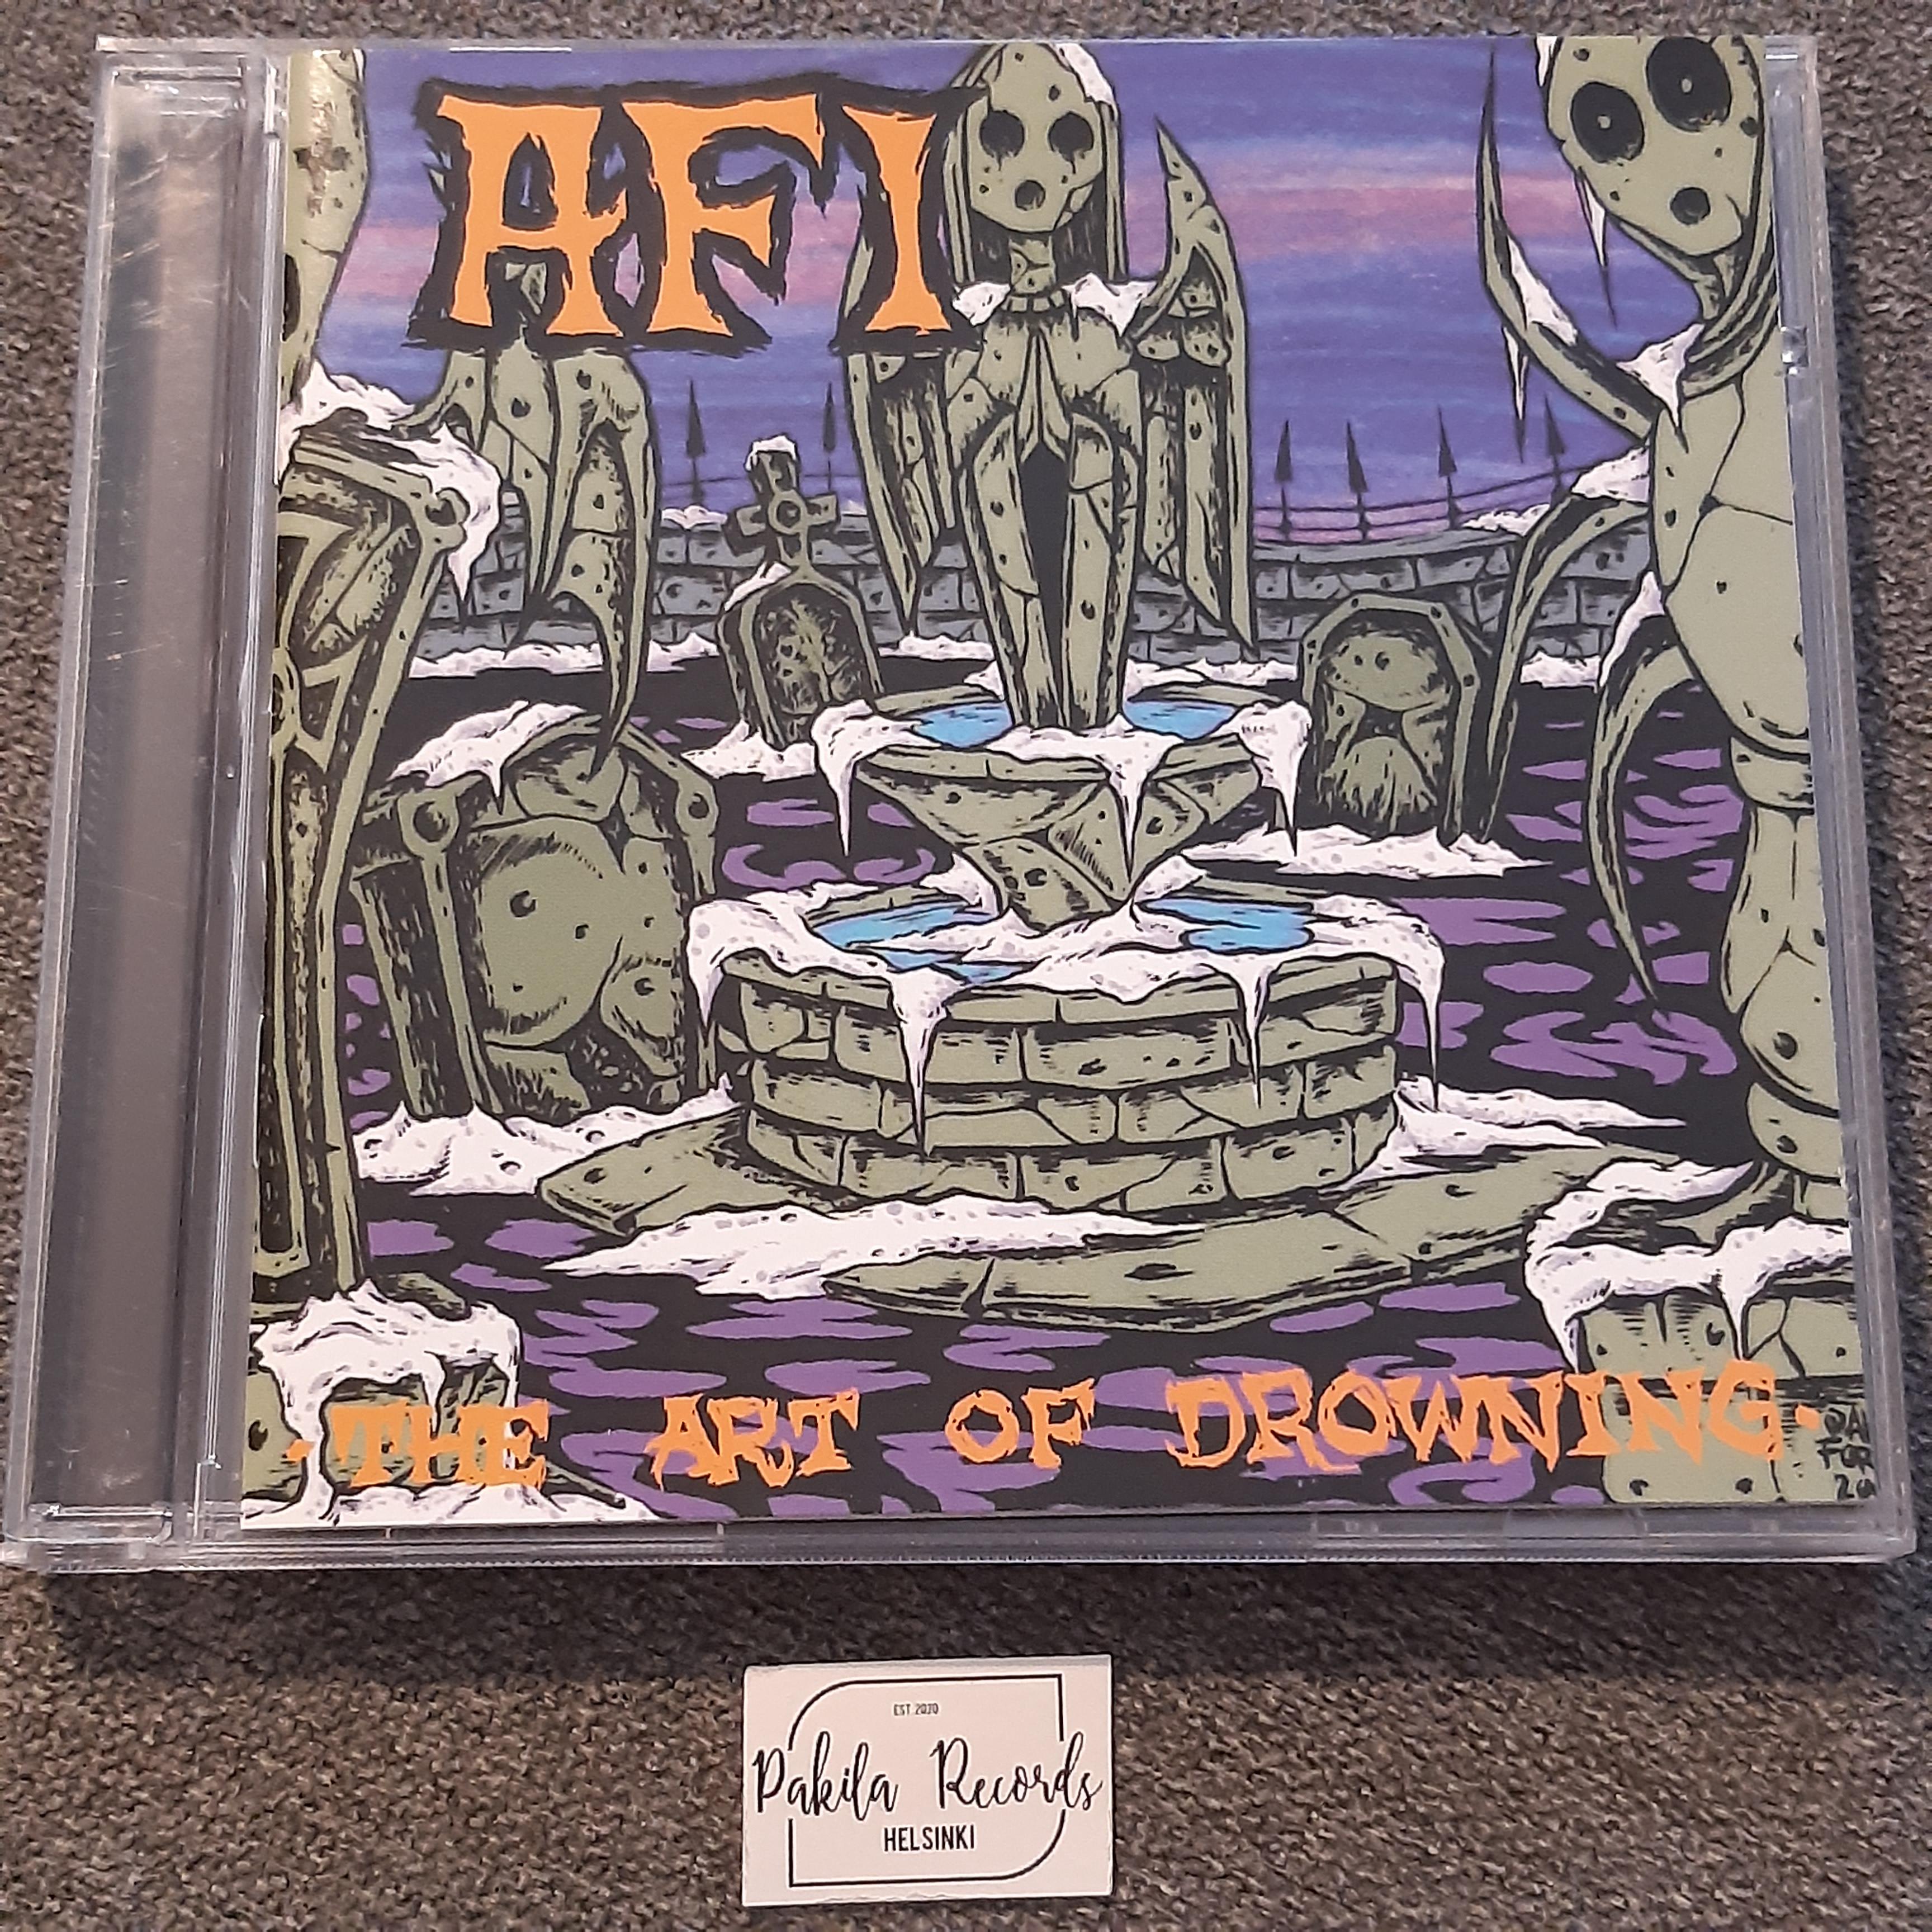 AFI - The Art Of Drowning - CD (käytetty)